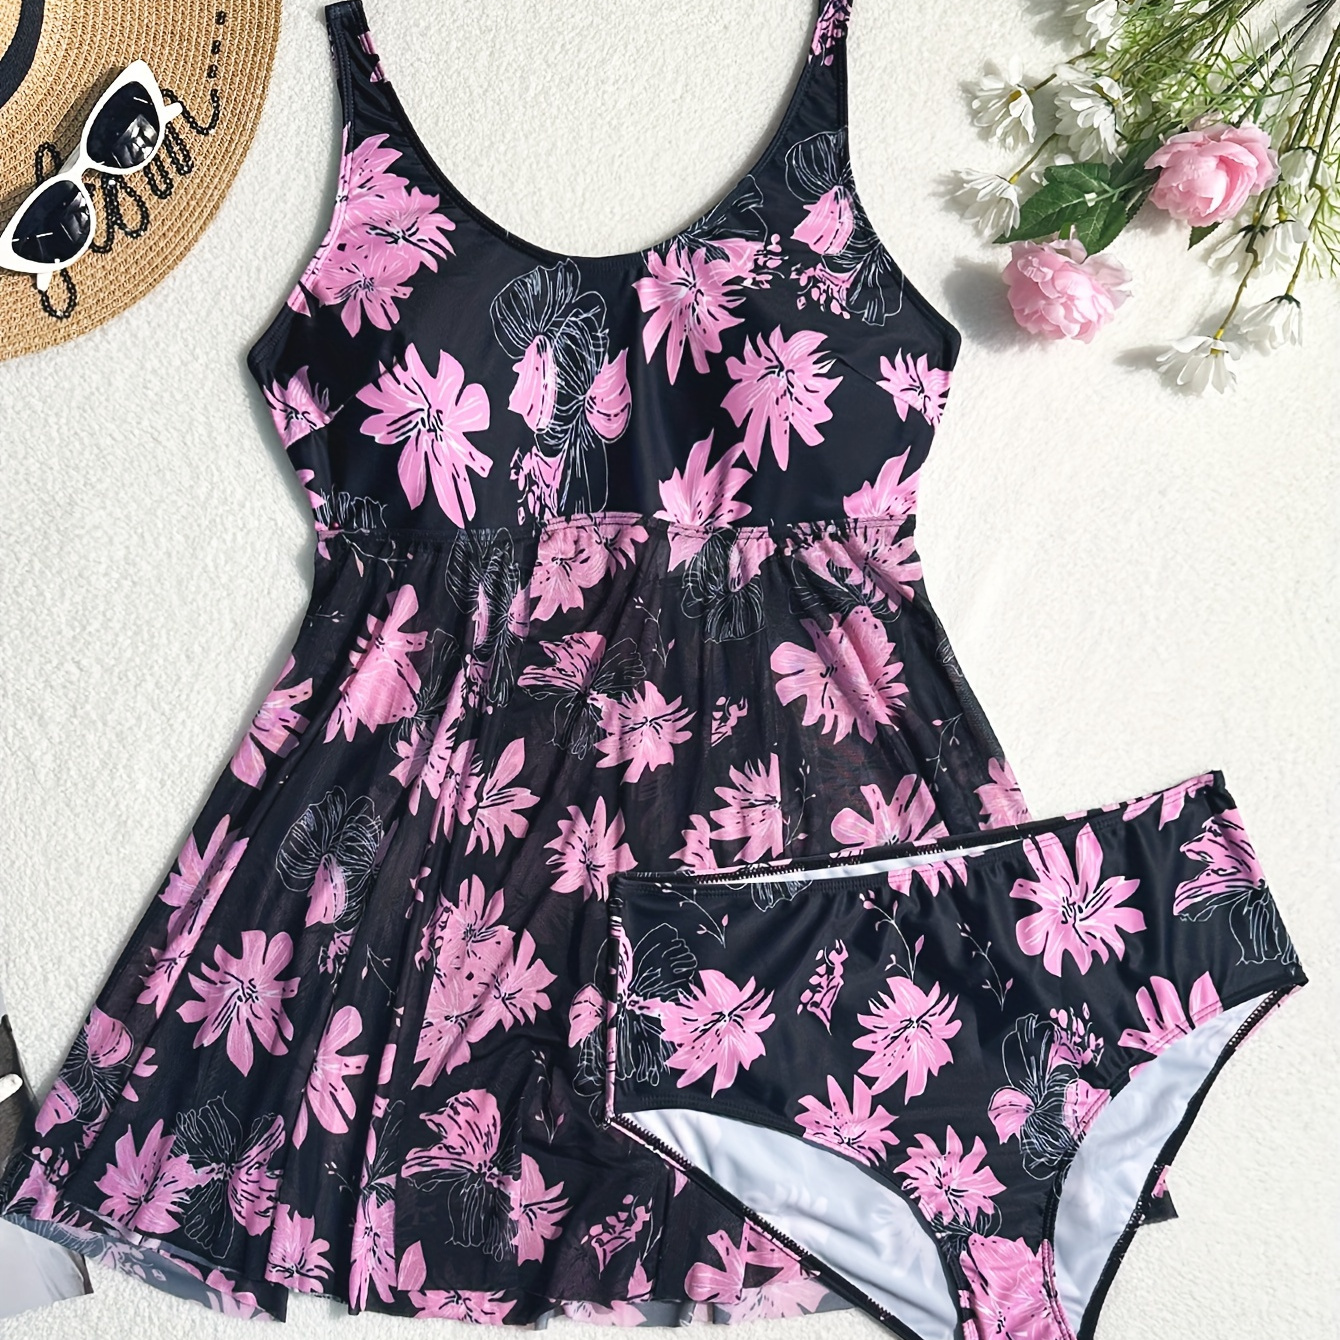 

Women's Plus Size Elegant Floral Swimdress, Black And Pinkish Print, 2-piece Swimsuit Flattering Tummy Control Design, Beachwear For Summer Vacation